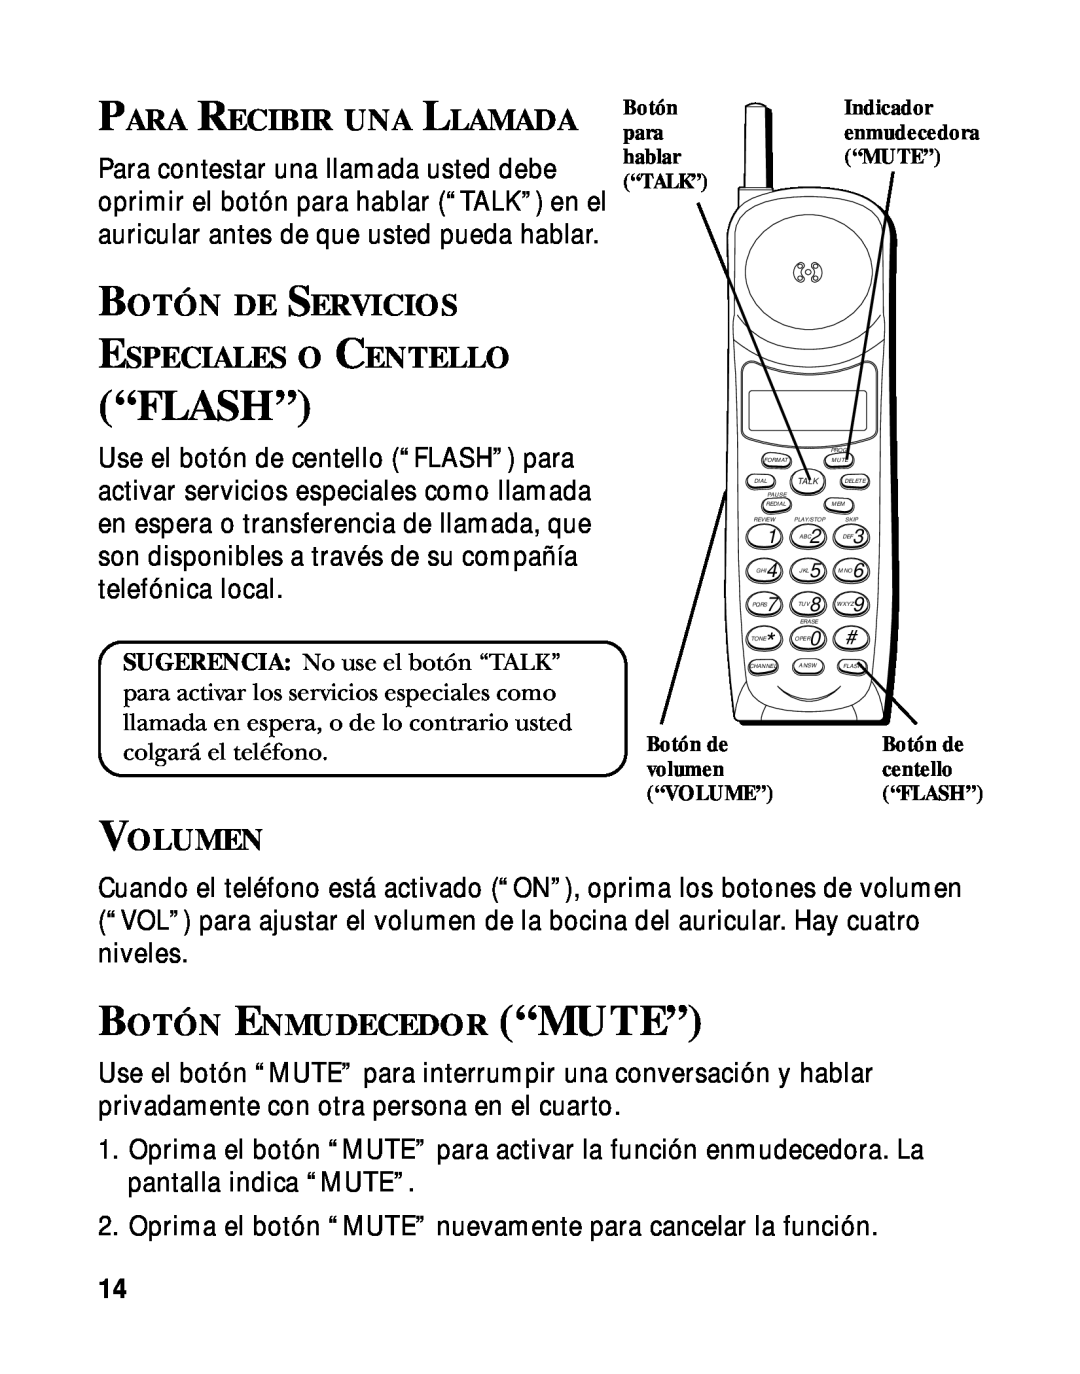 RCA 900 MHz “Flash”, Para Recibir Una Llamada, Botón De Servicios Especiales O Centello, Volumen, Botón Enmudecedor “Mute” 